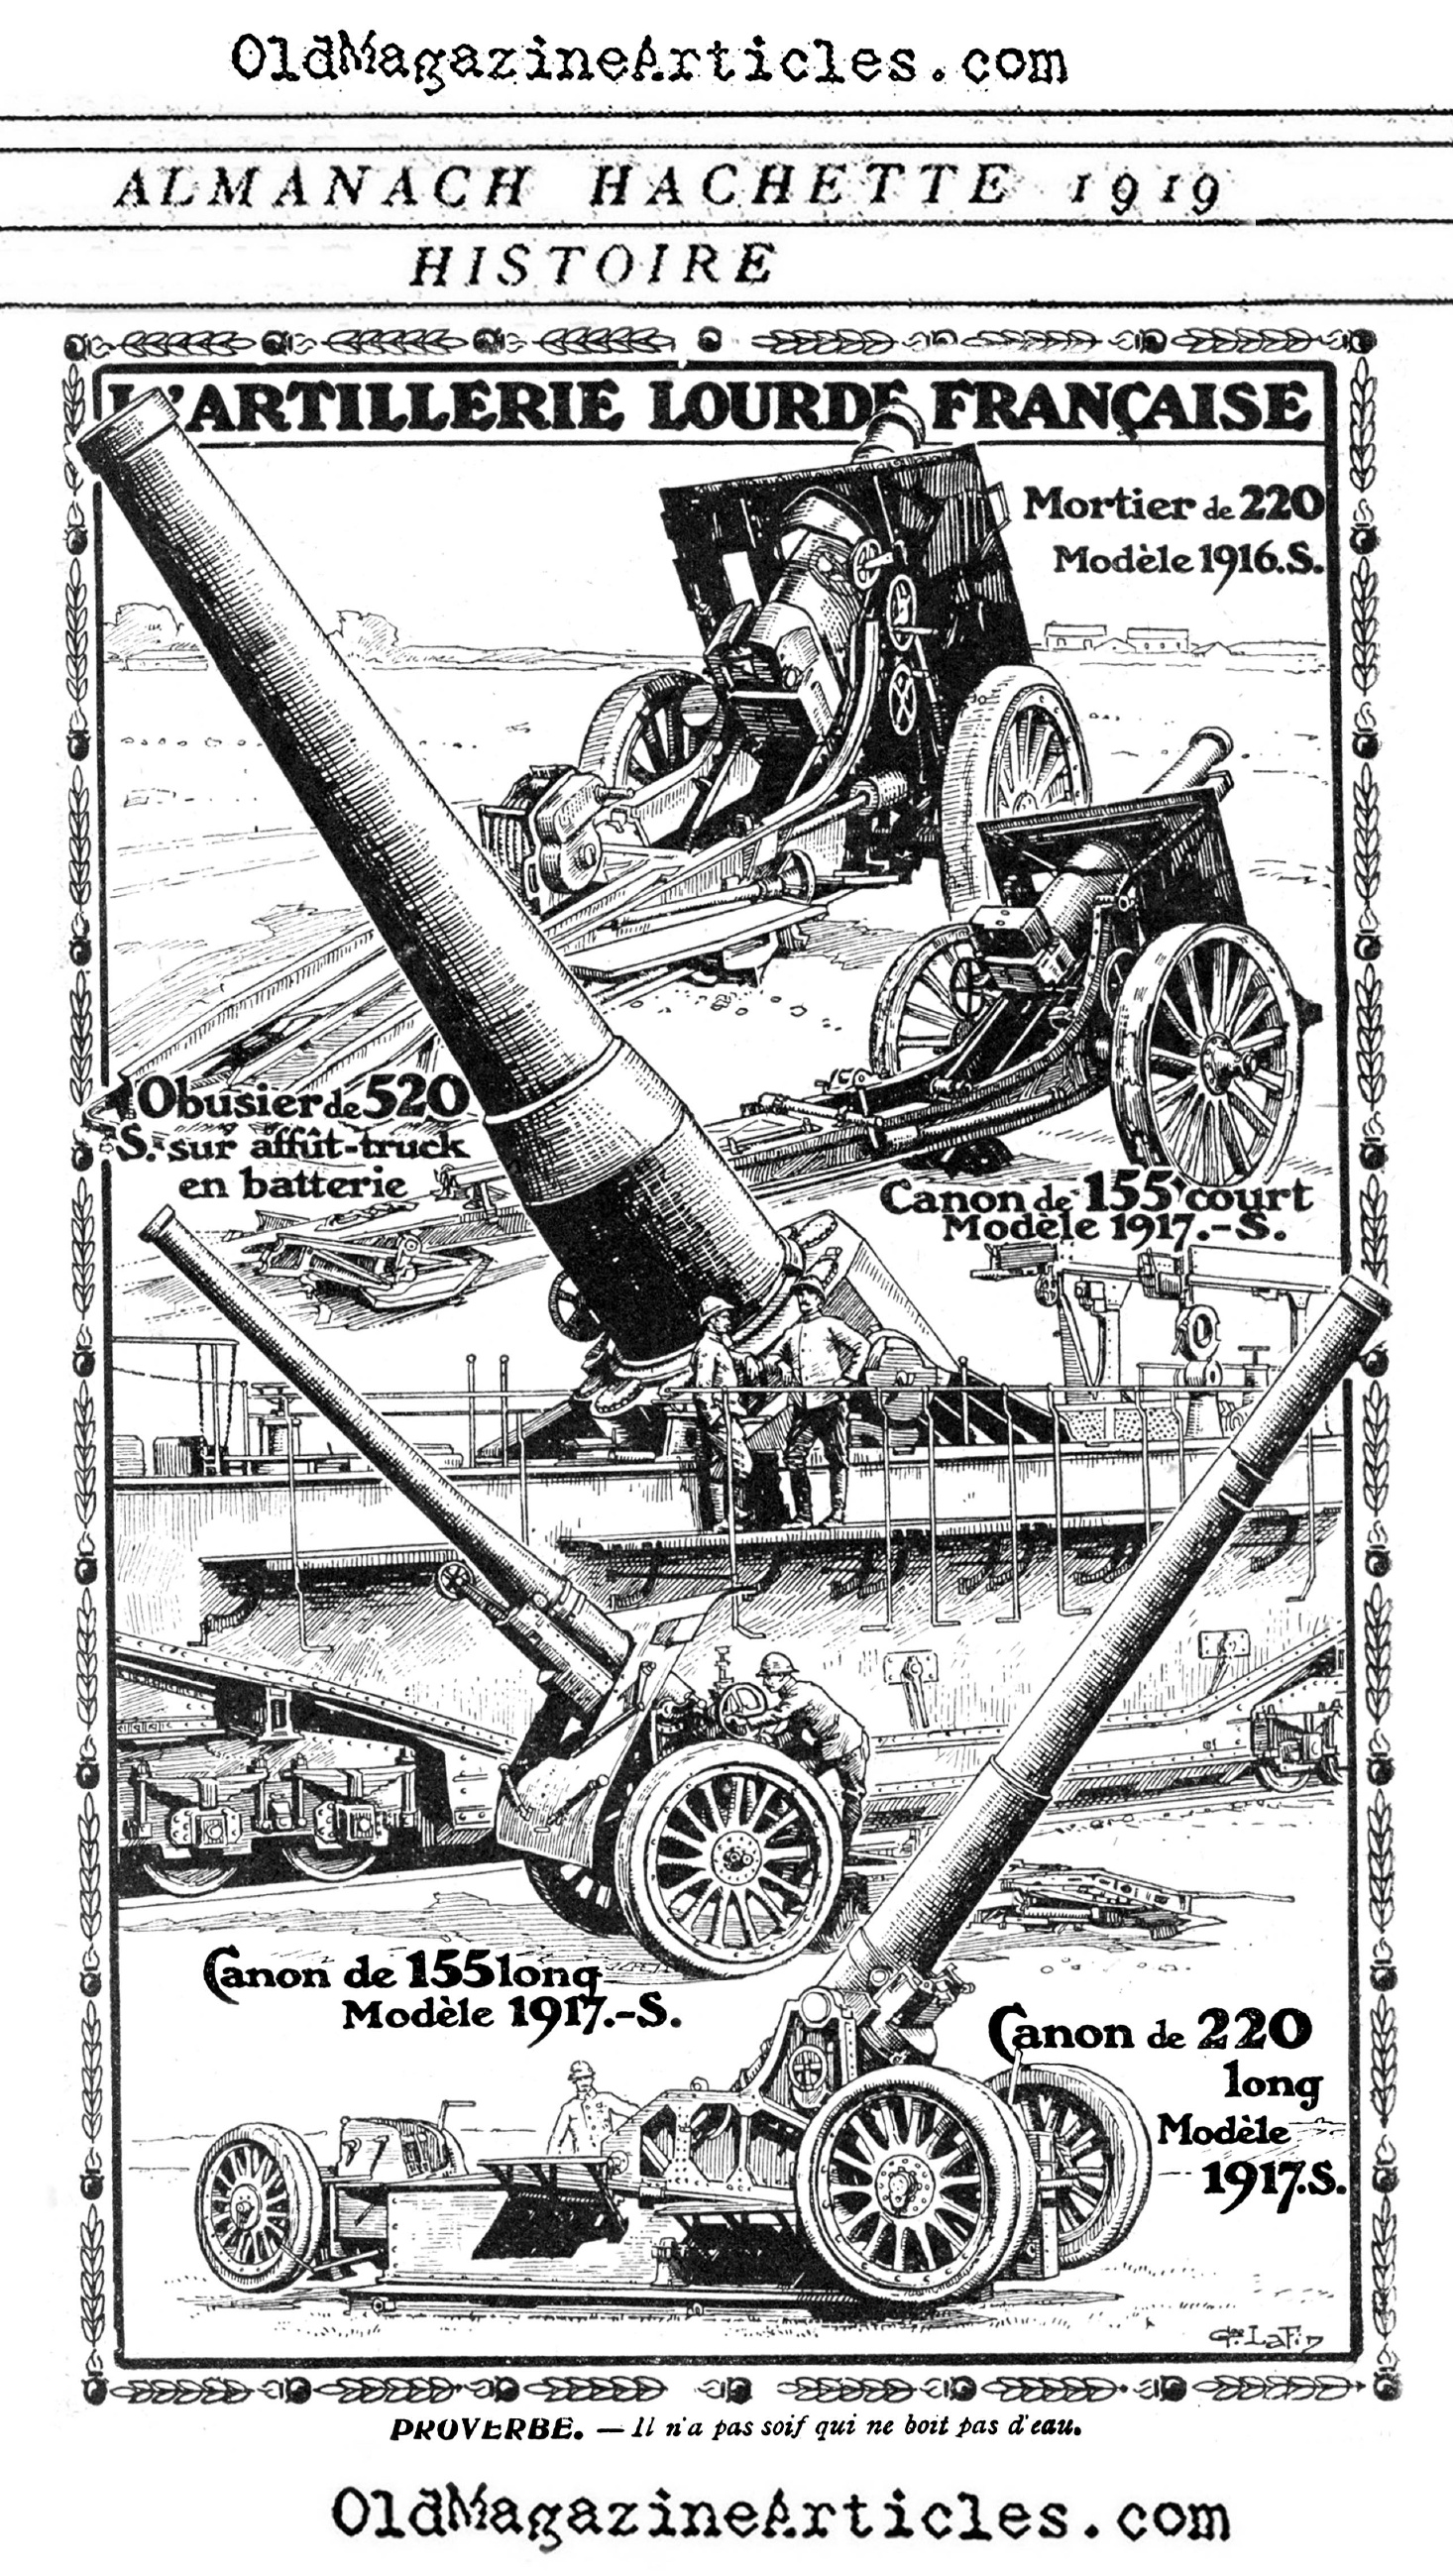 French Artillery Pieces (Almanach Hachette, 1919)